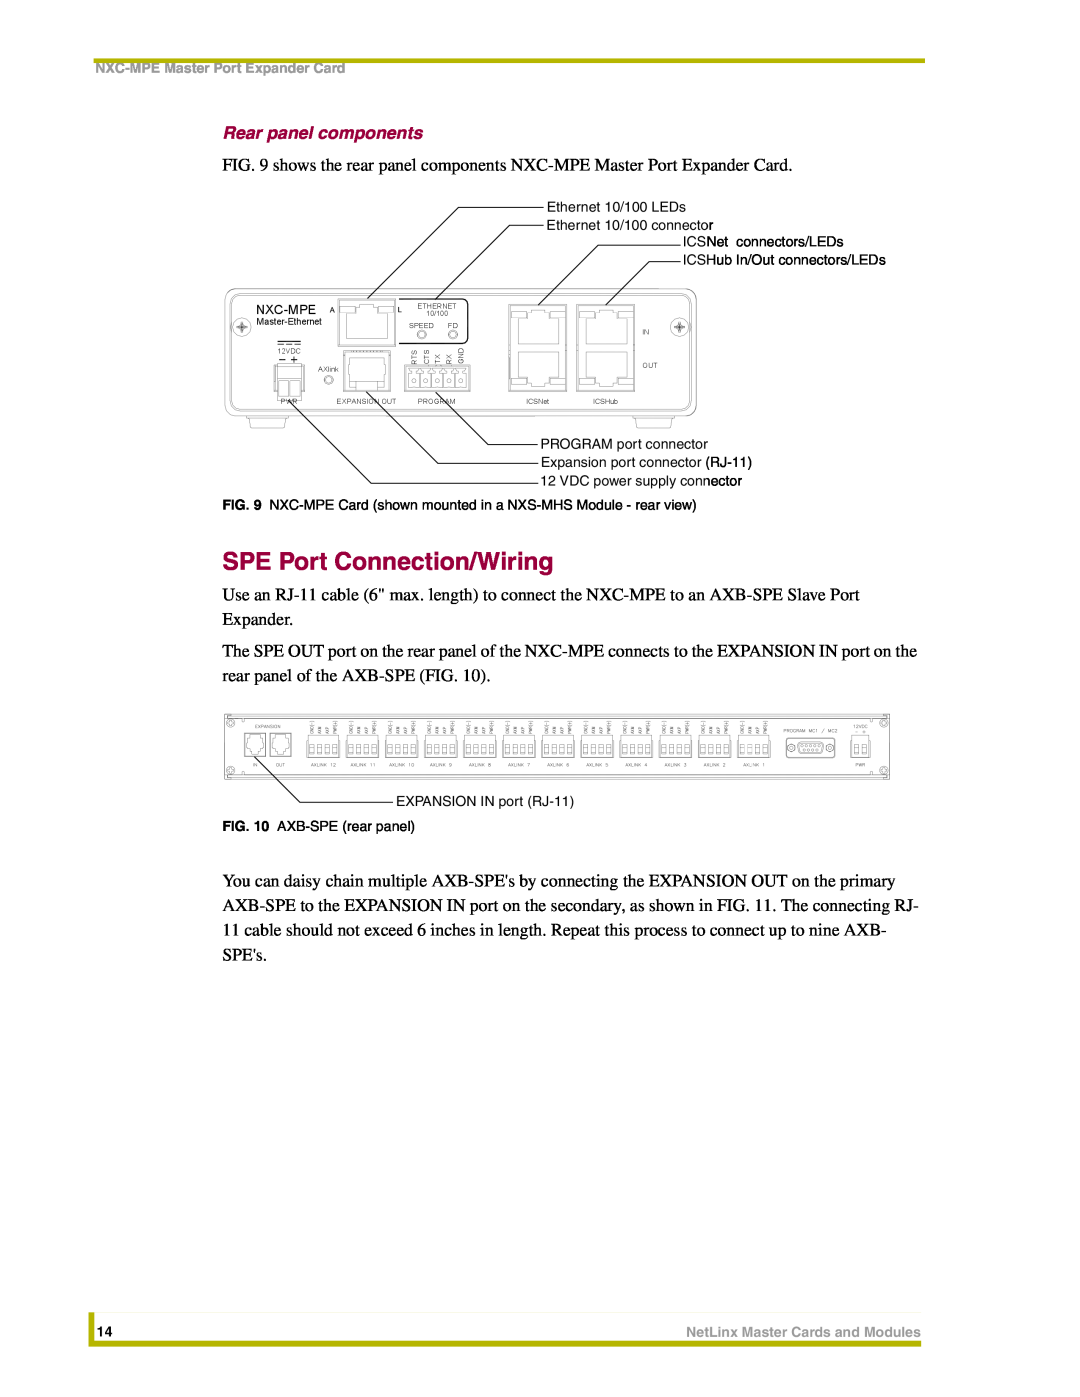 AMX NXM-MHS SPE Port Connection/Wiring, Rear panel components, Ethernet 10/100 LEDs Ethernet 10/100 connector 